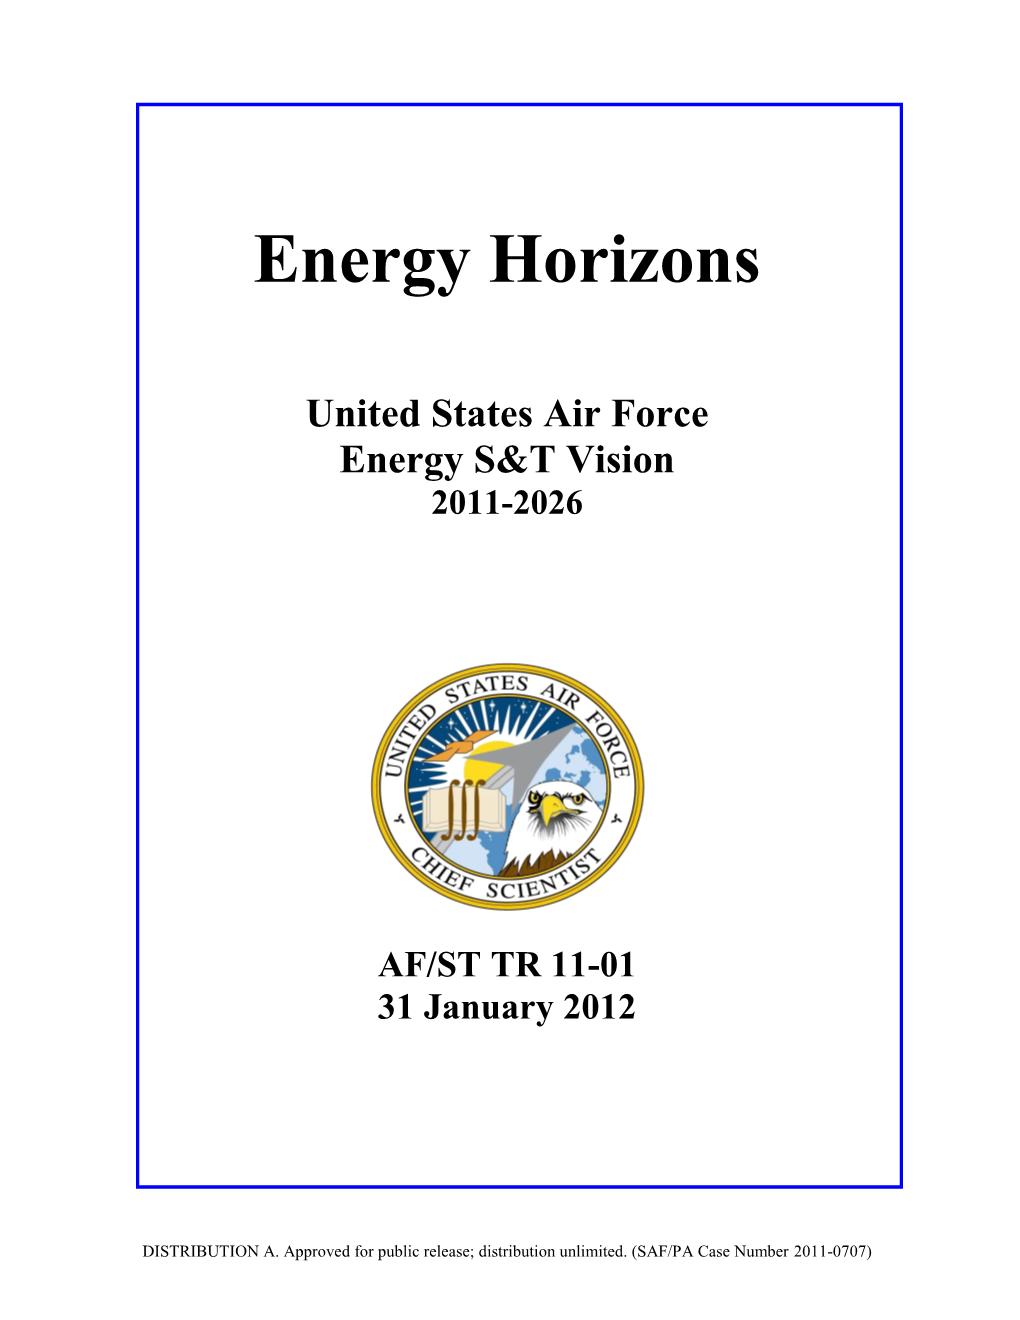 USAF Energy Horizons